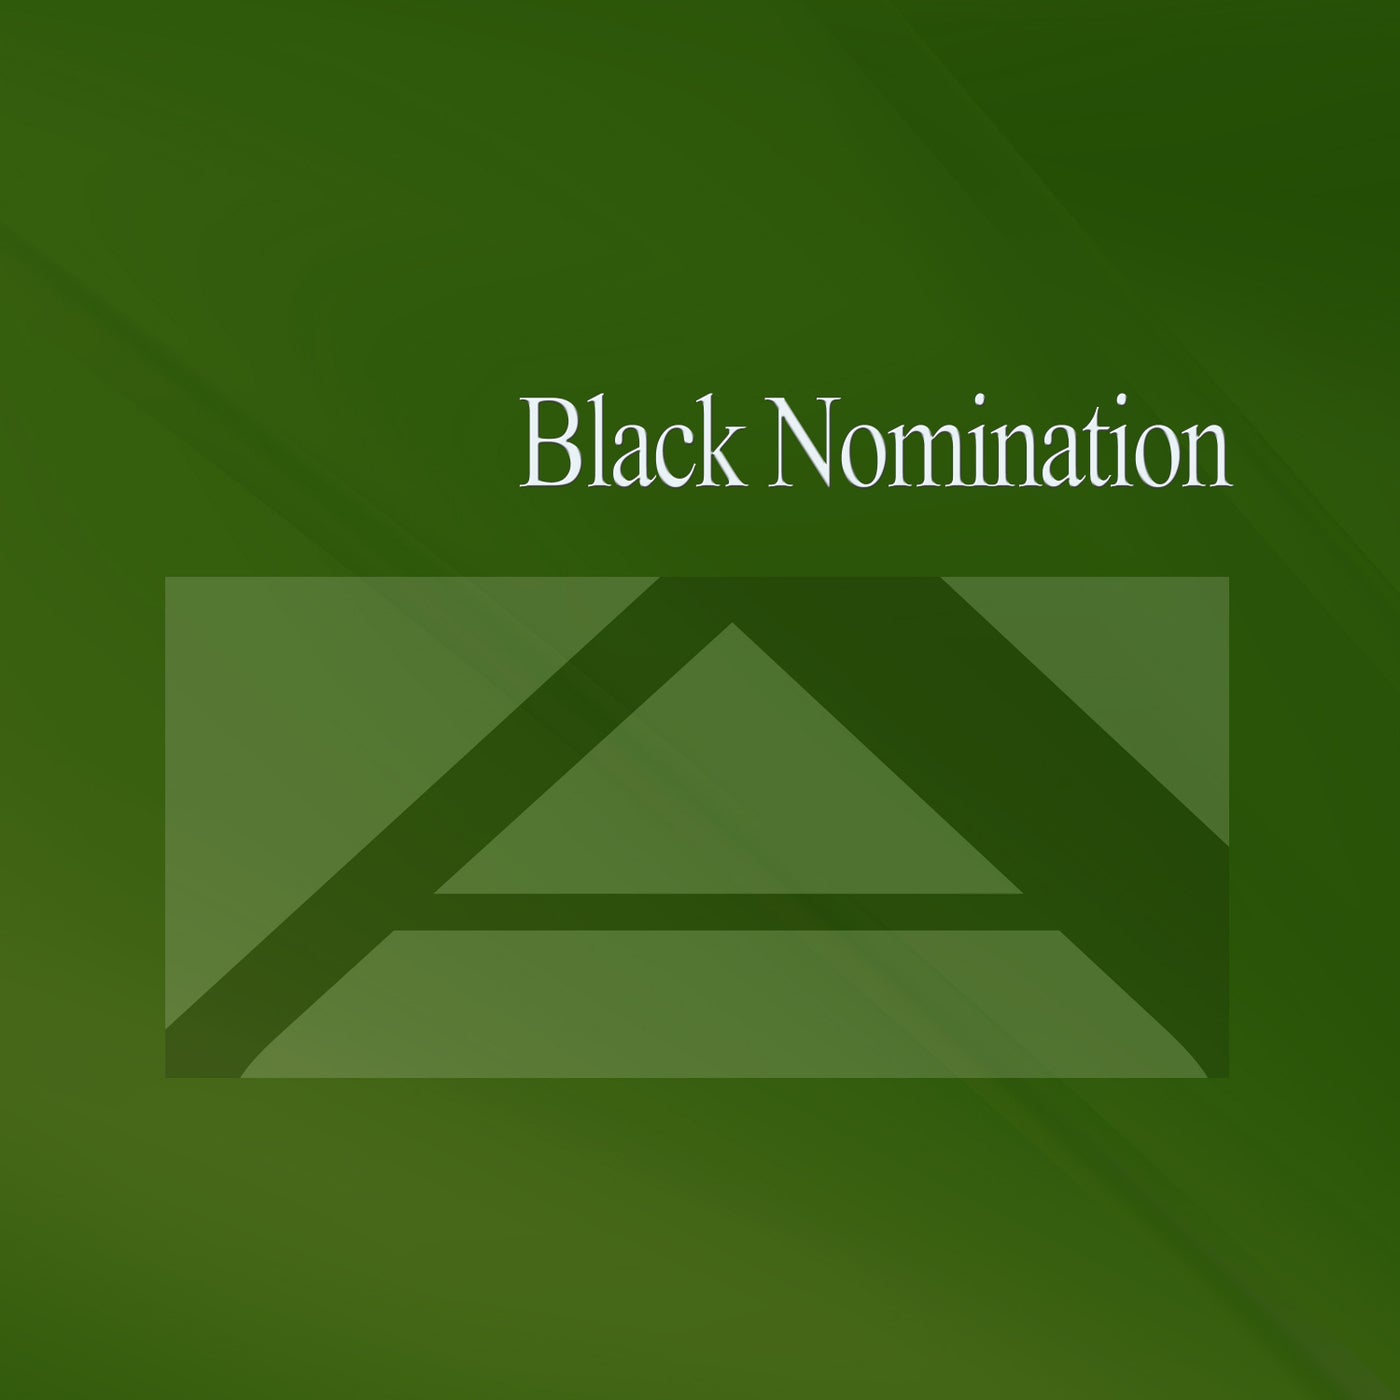 Black Nomination